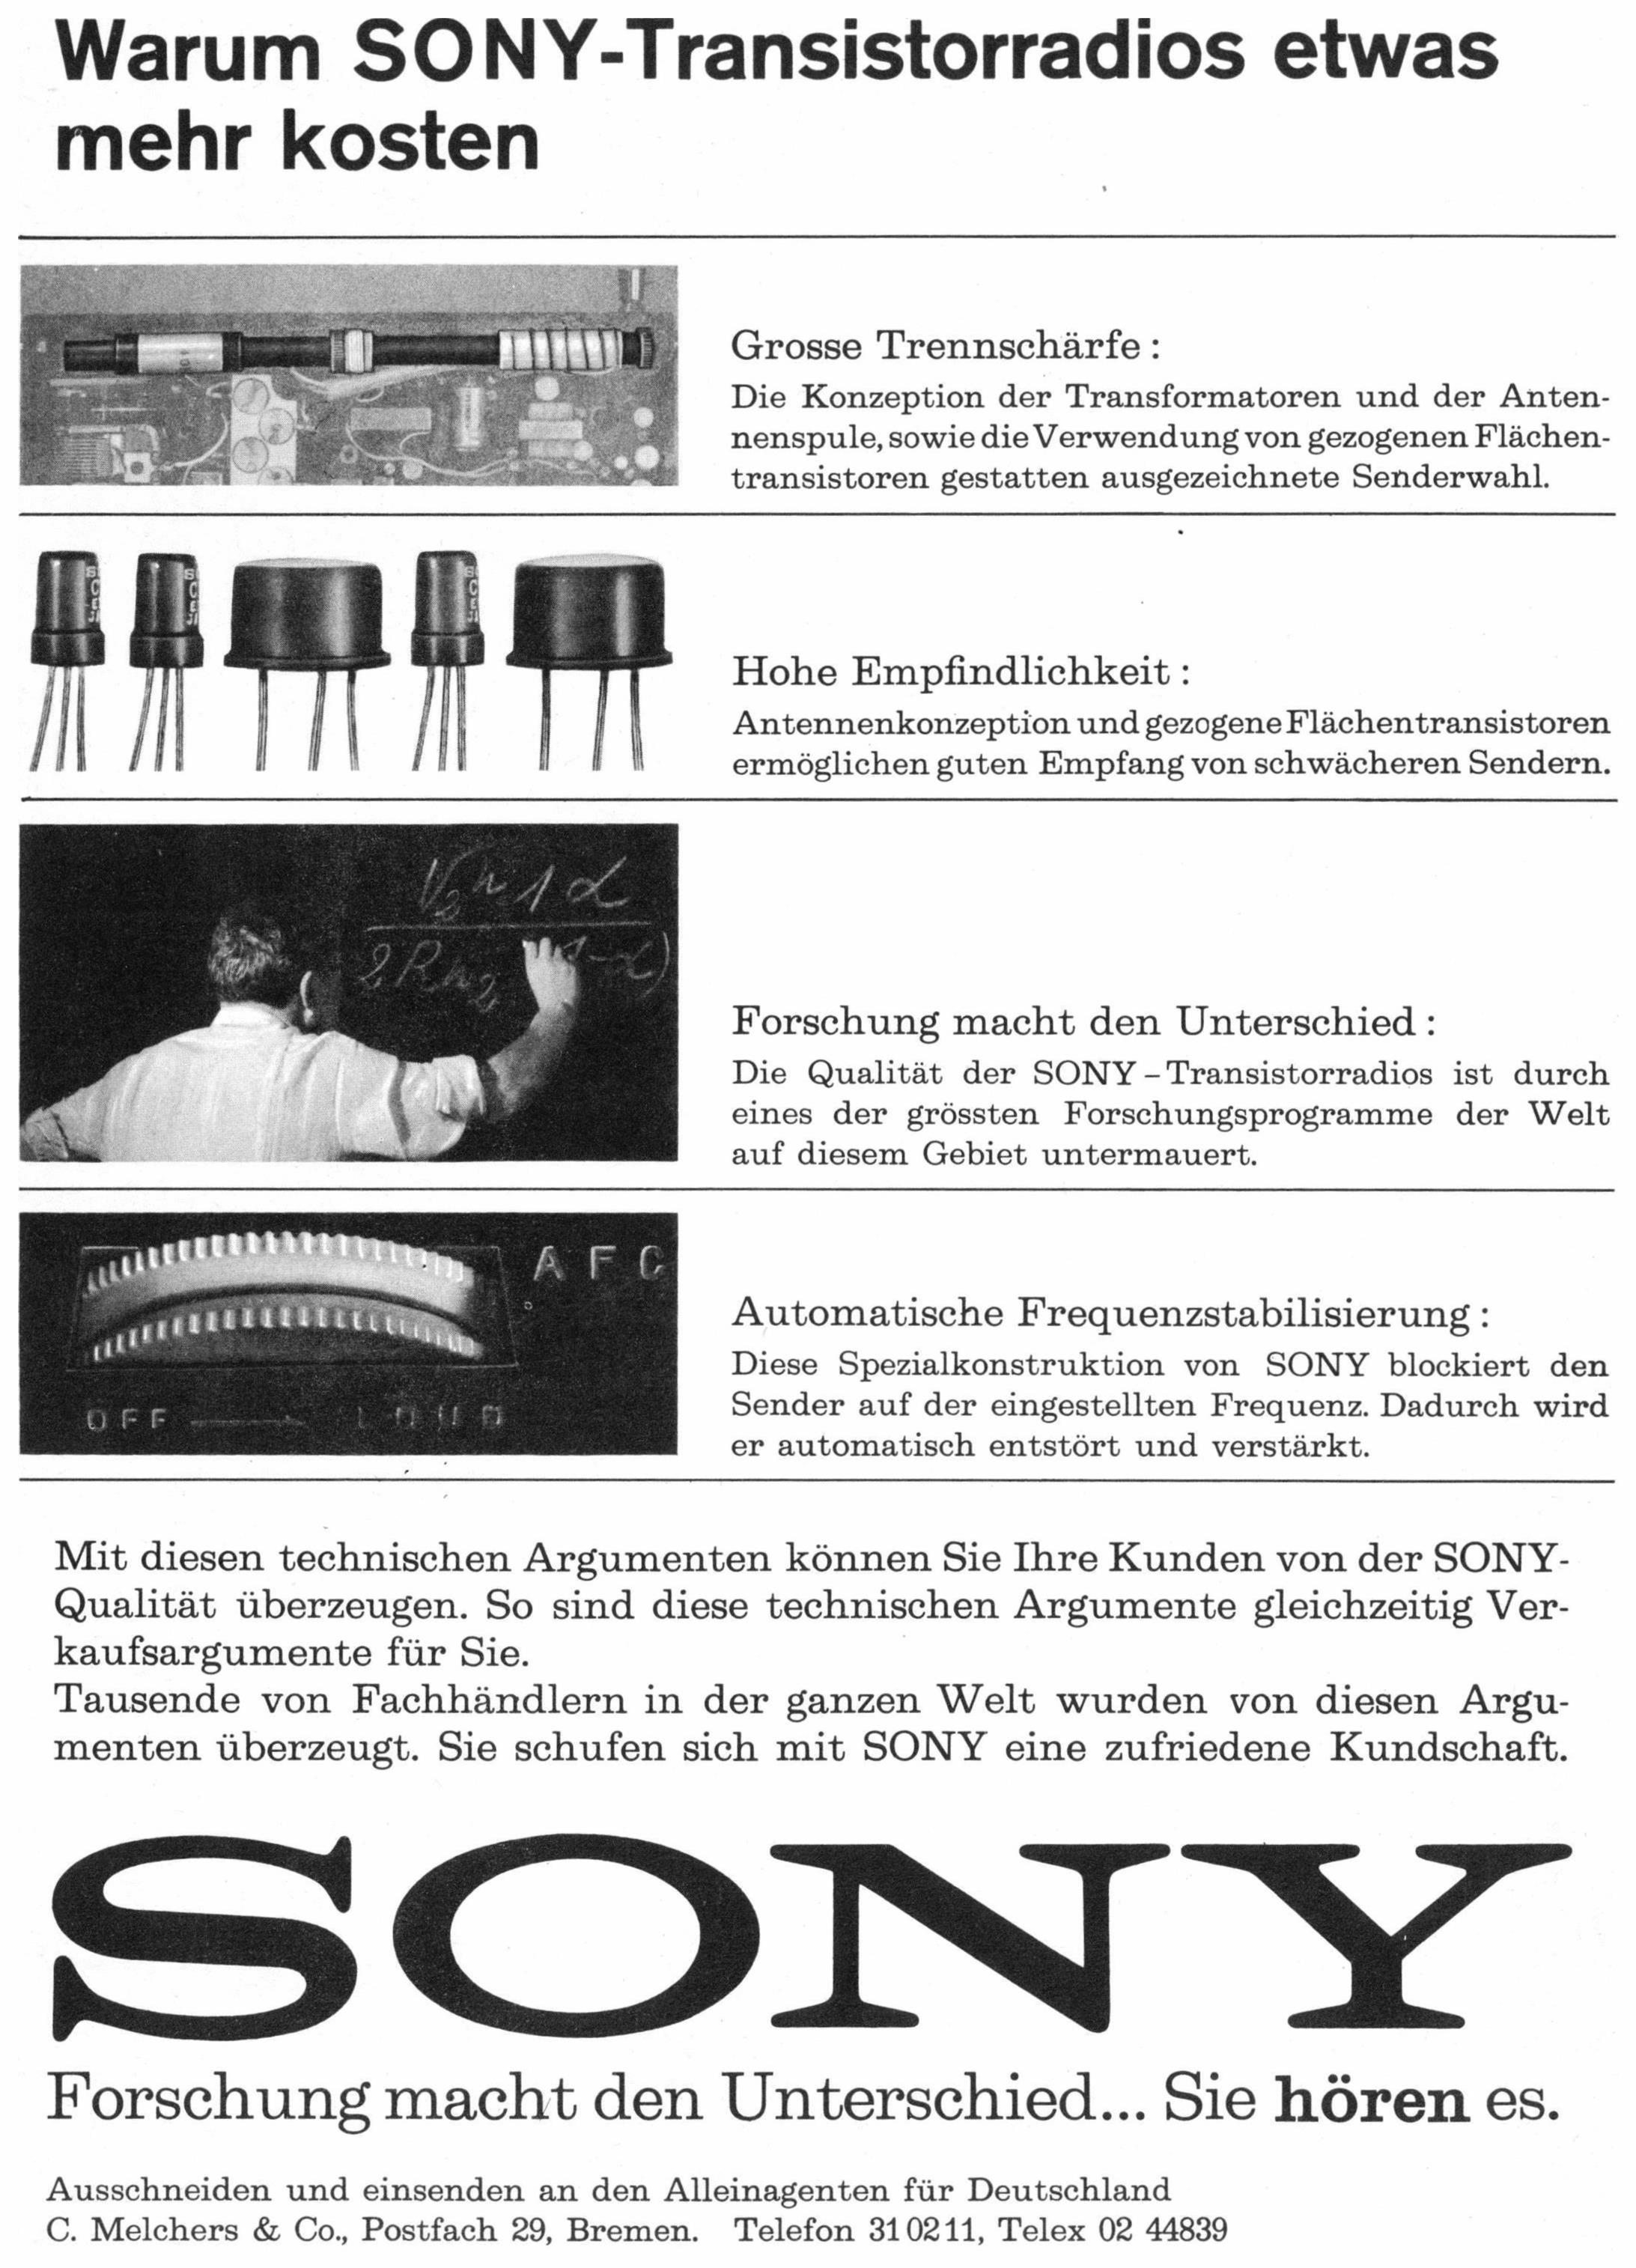 Sony 1962 0.jpg